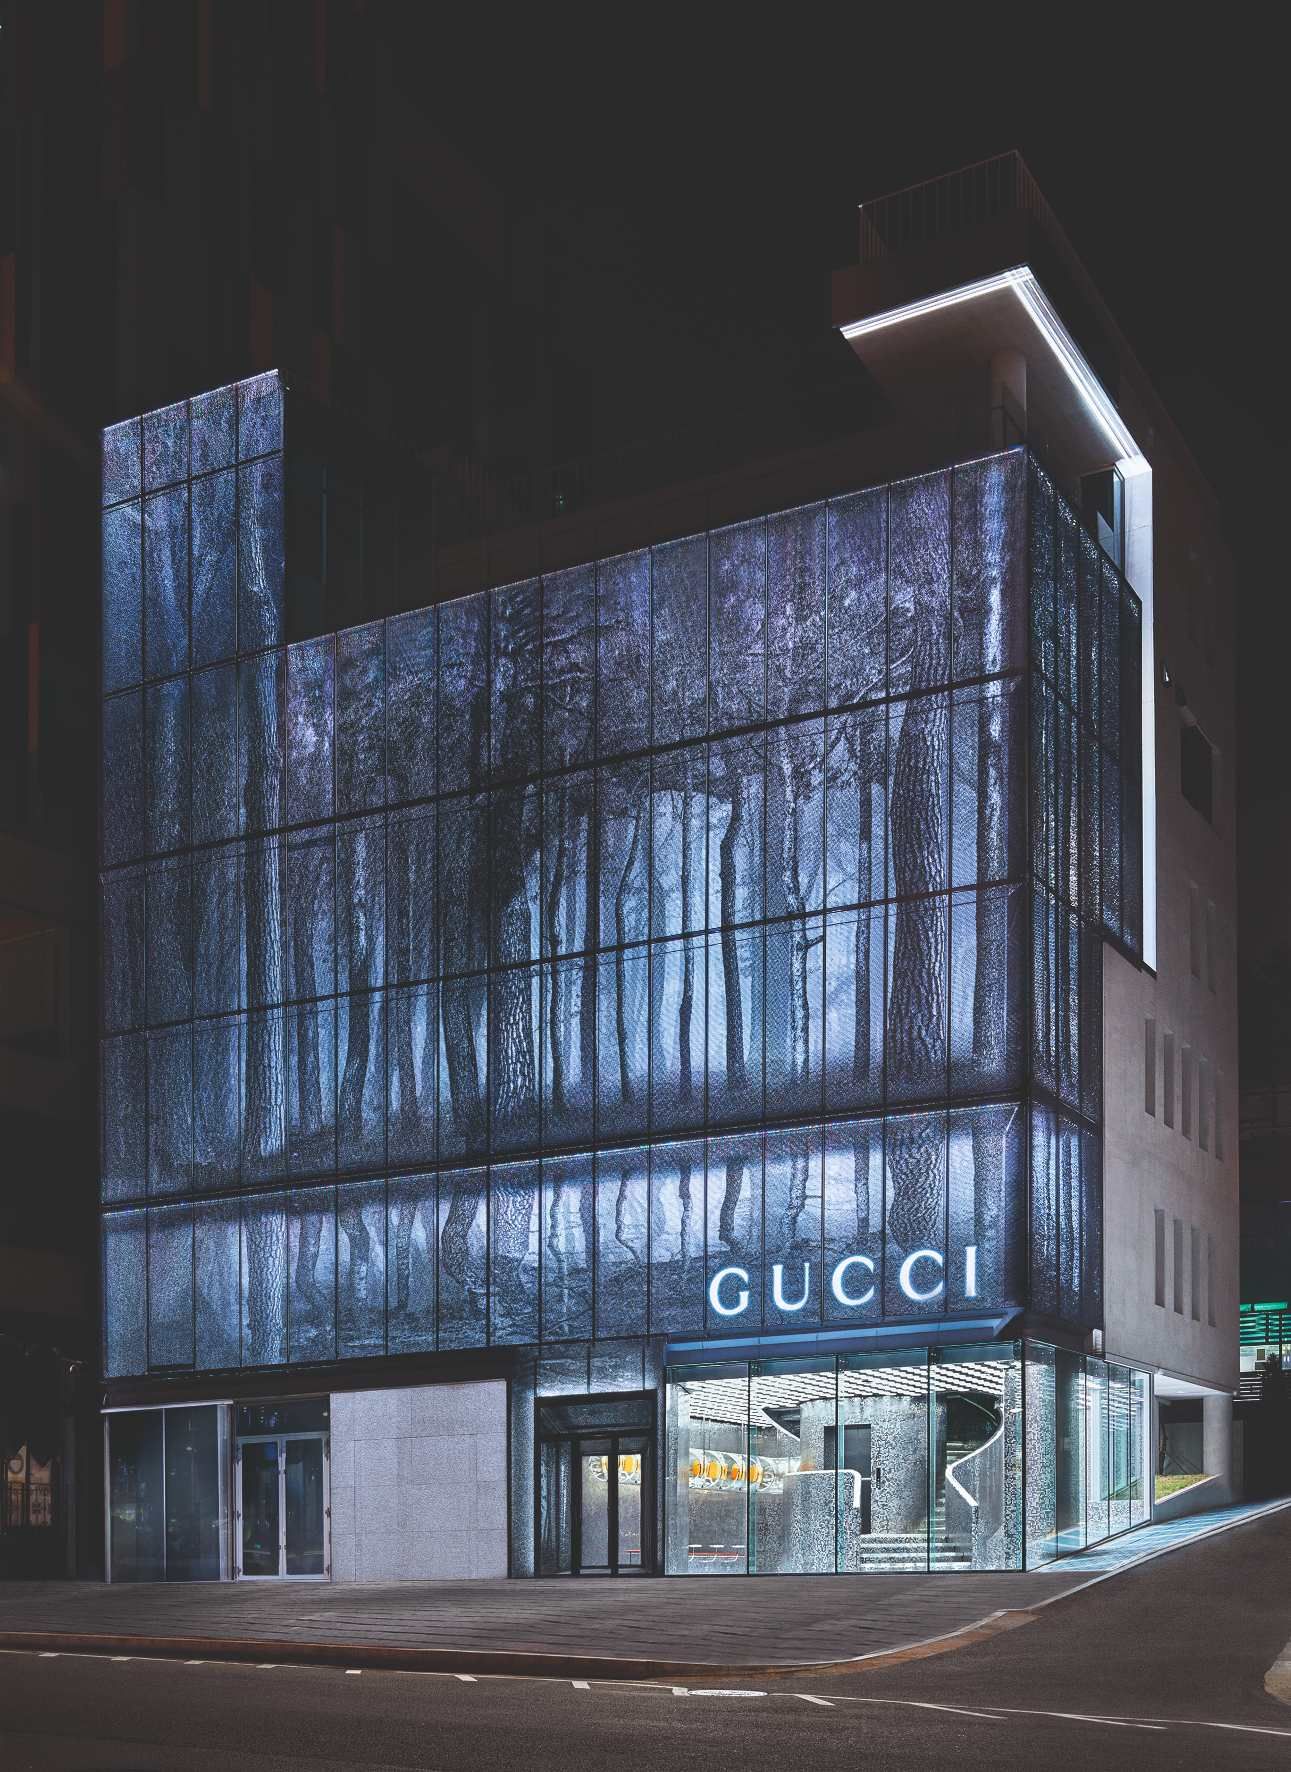 Kemewahan Butik Gucci Di Seoul Korea Selatan